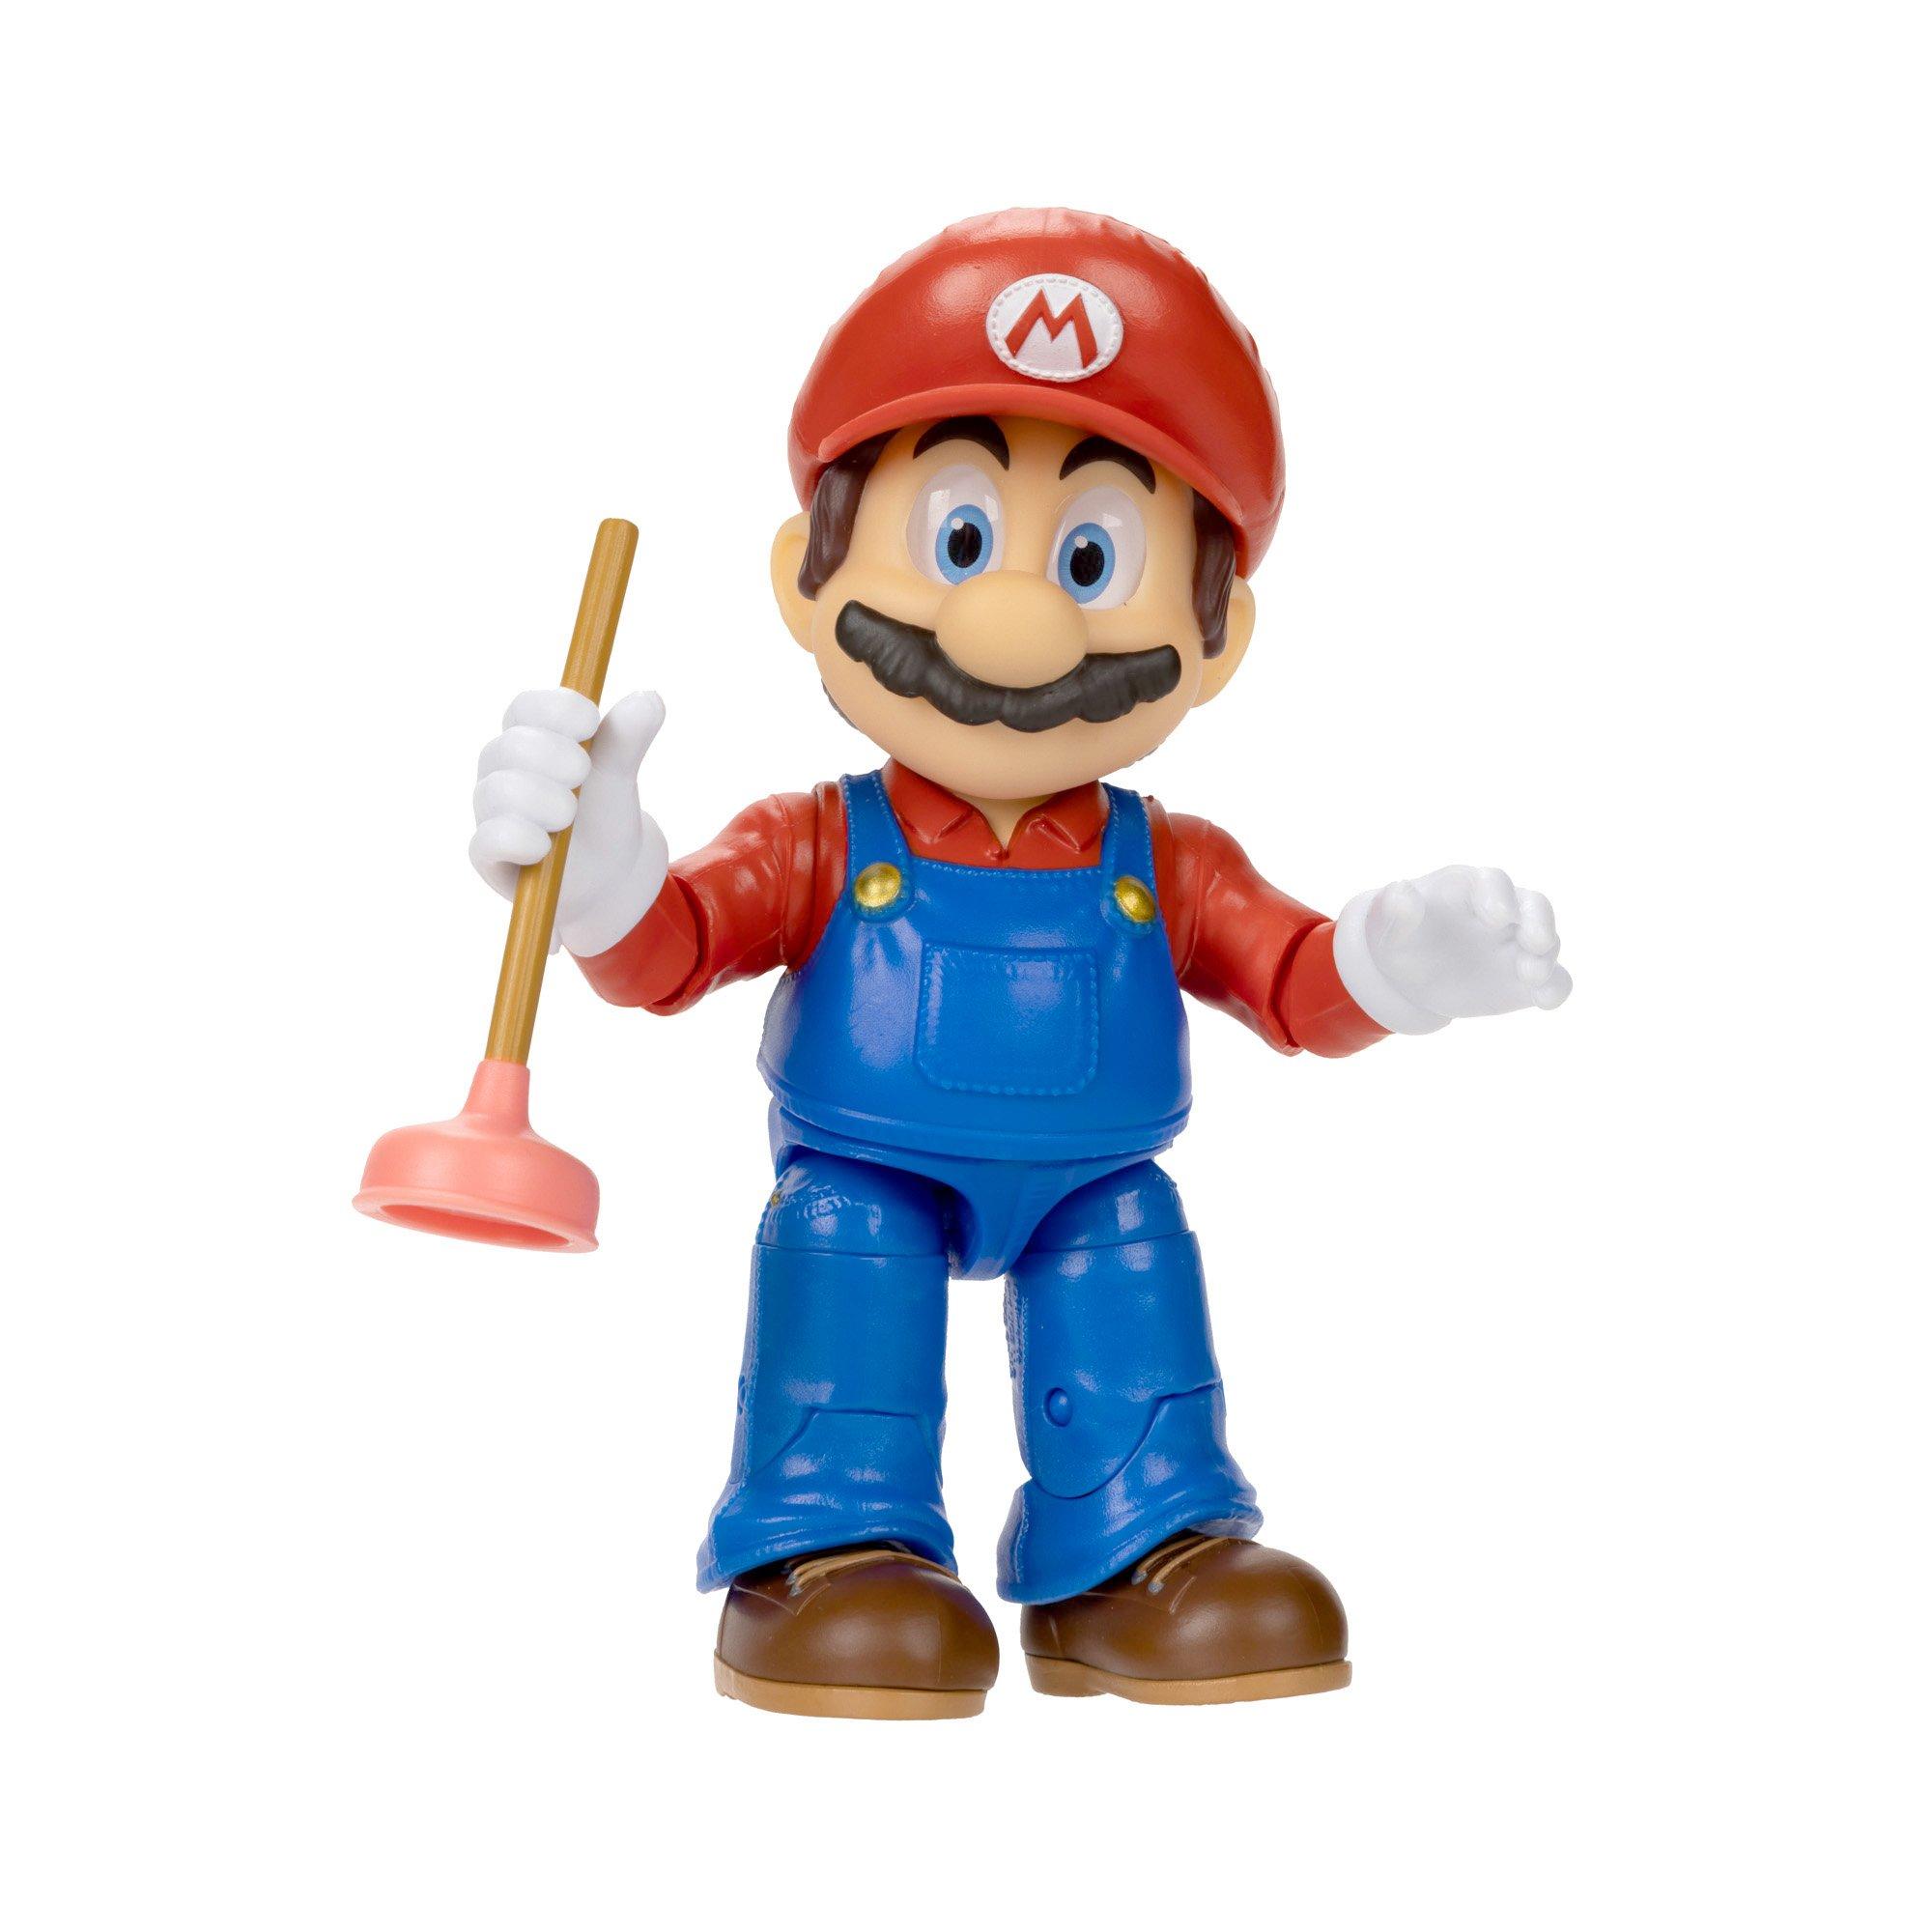 Jakks Pacific Super Mario Odyssey 5 Figure Set | GameStop